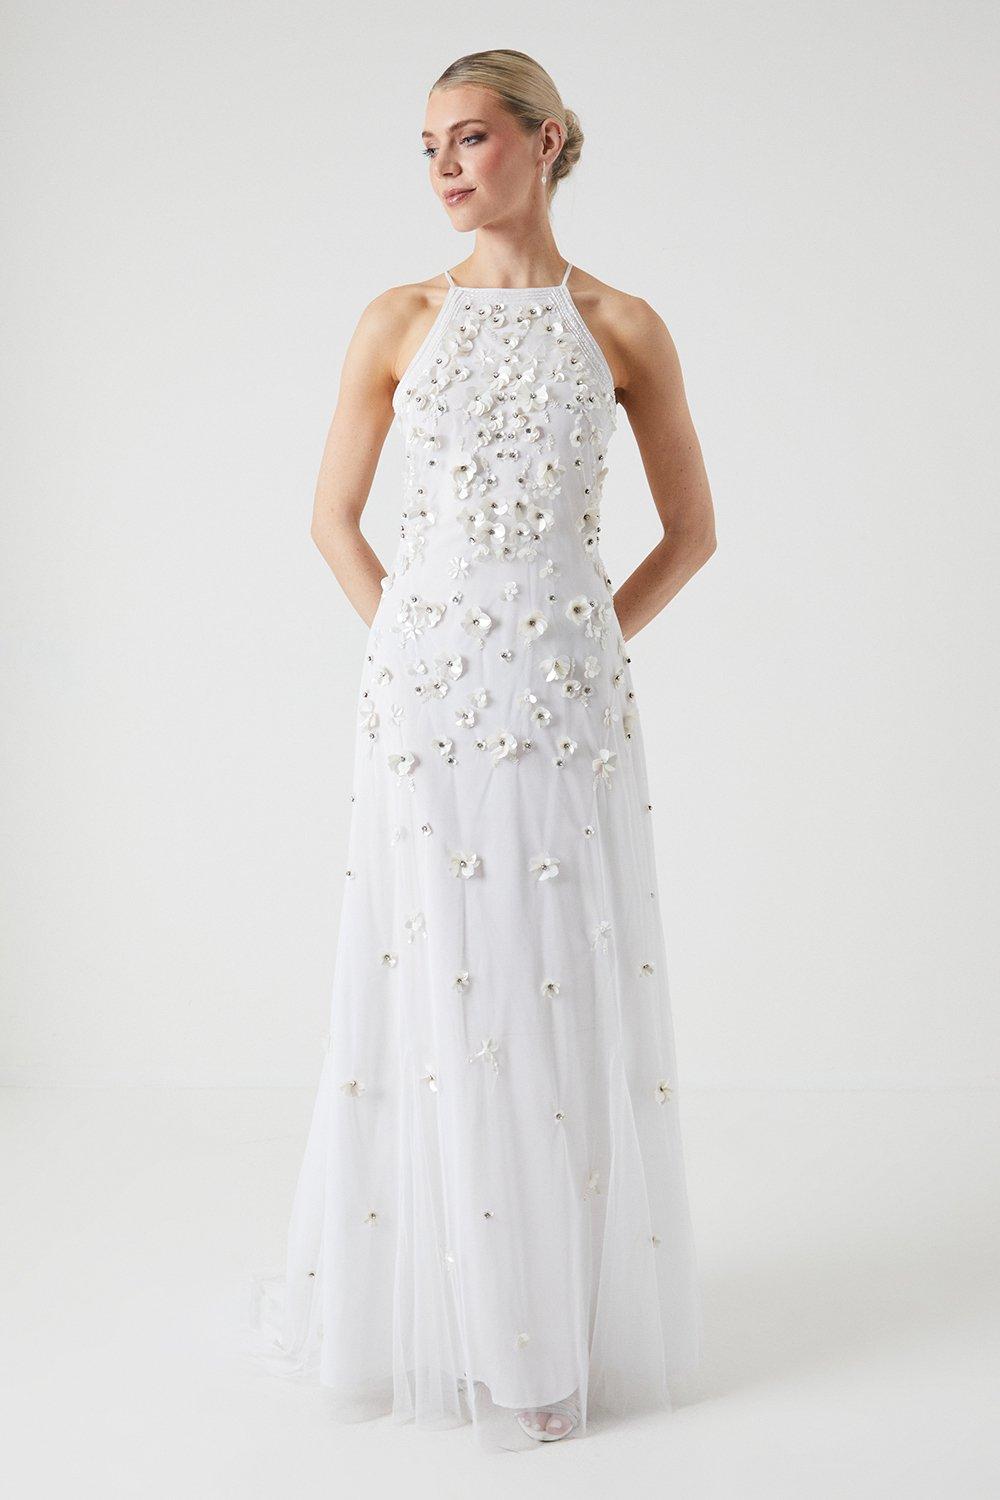 Jasmine Embellished Halter Wedding Dress - Ivory